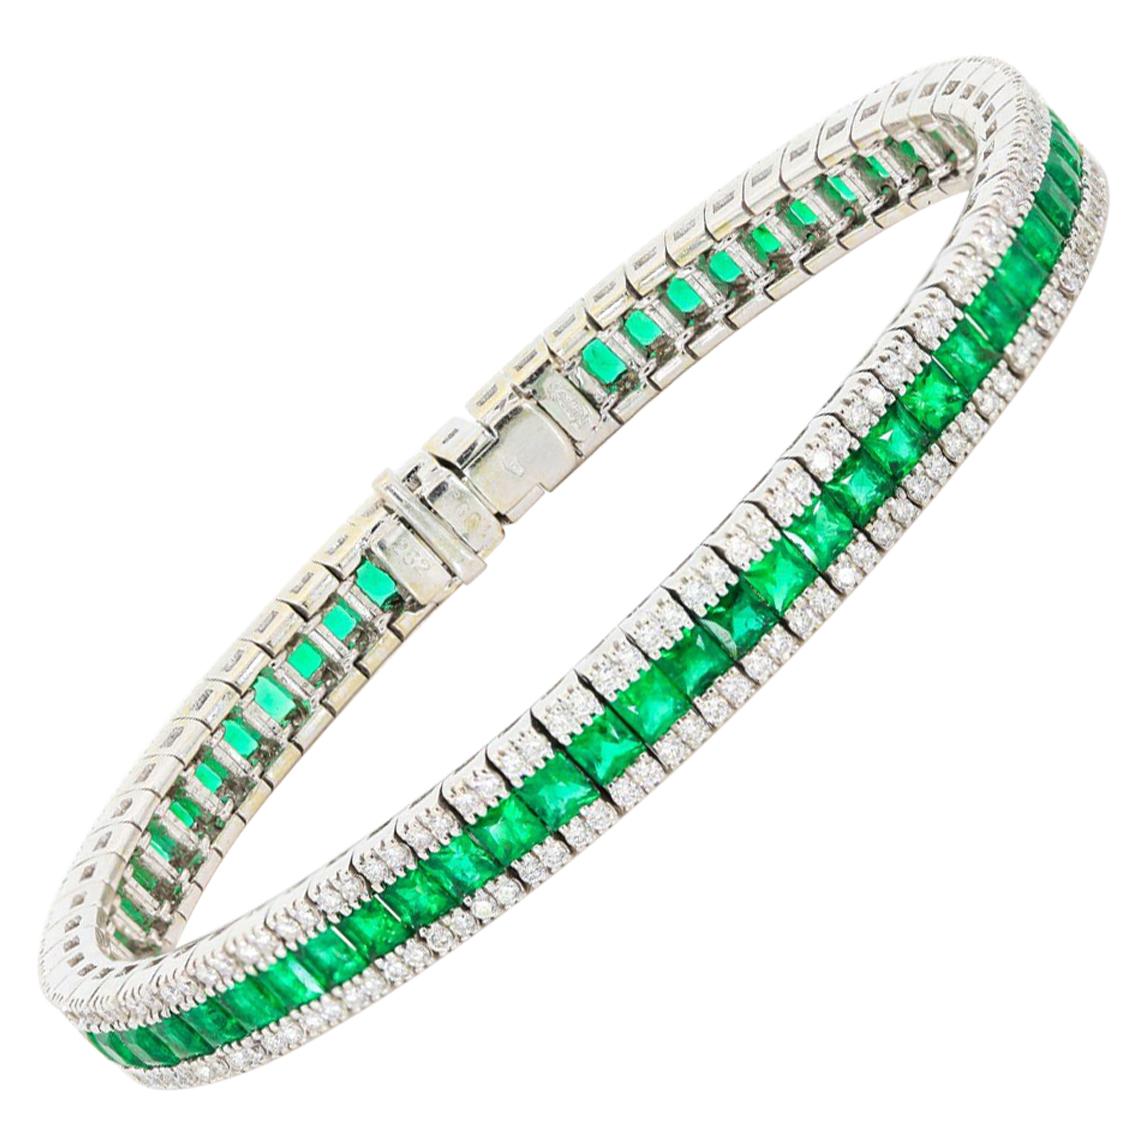 6.64 Carat Colombian Emerald and Diamond Bracelet